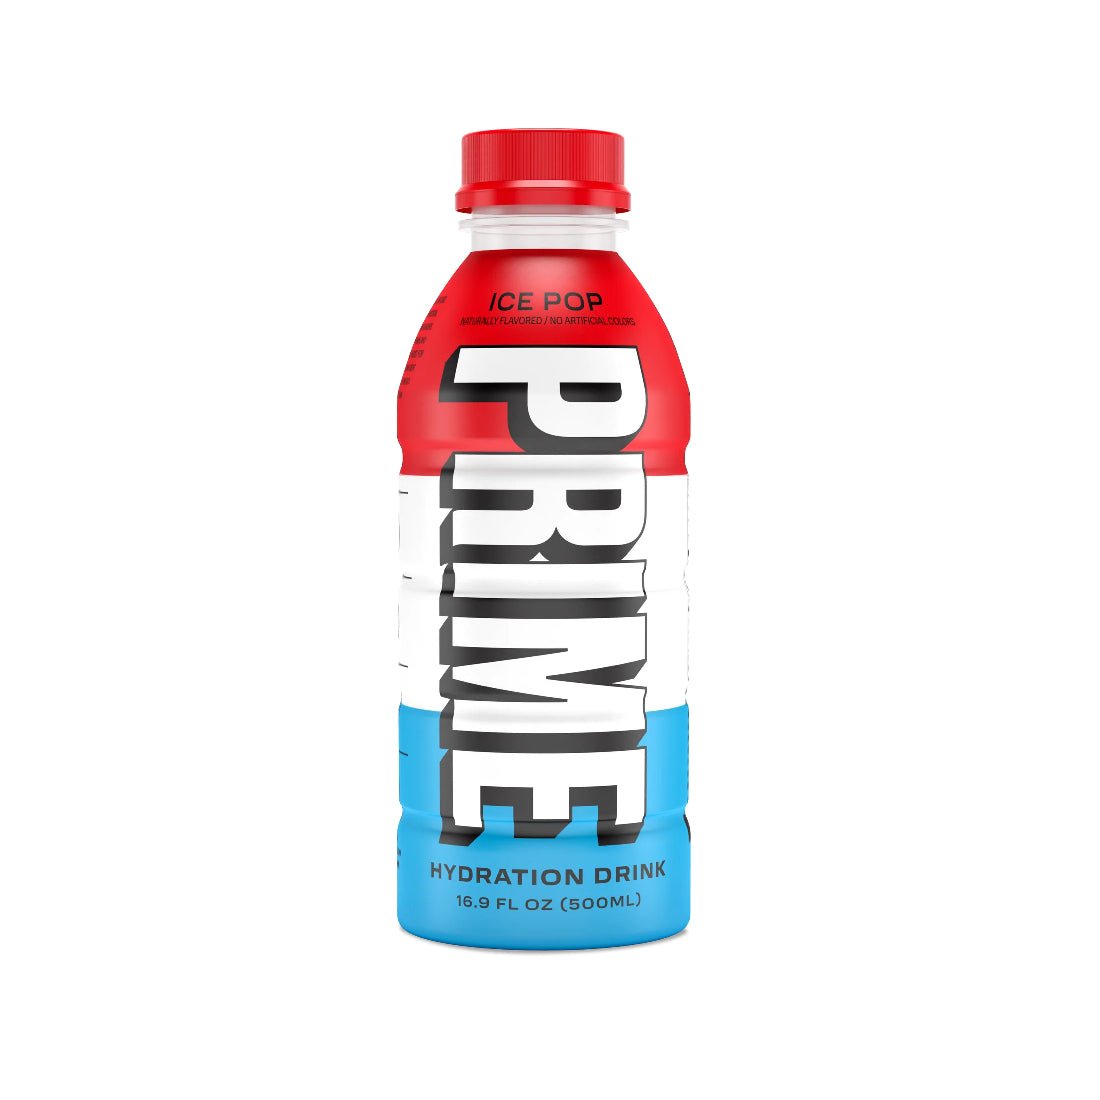 Prime Hydration Drink - Ice Pop - مشروب هيدراتيه - Store 974 | ستور ٩٧٤